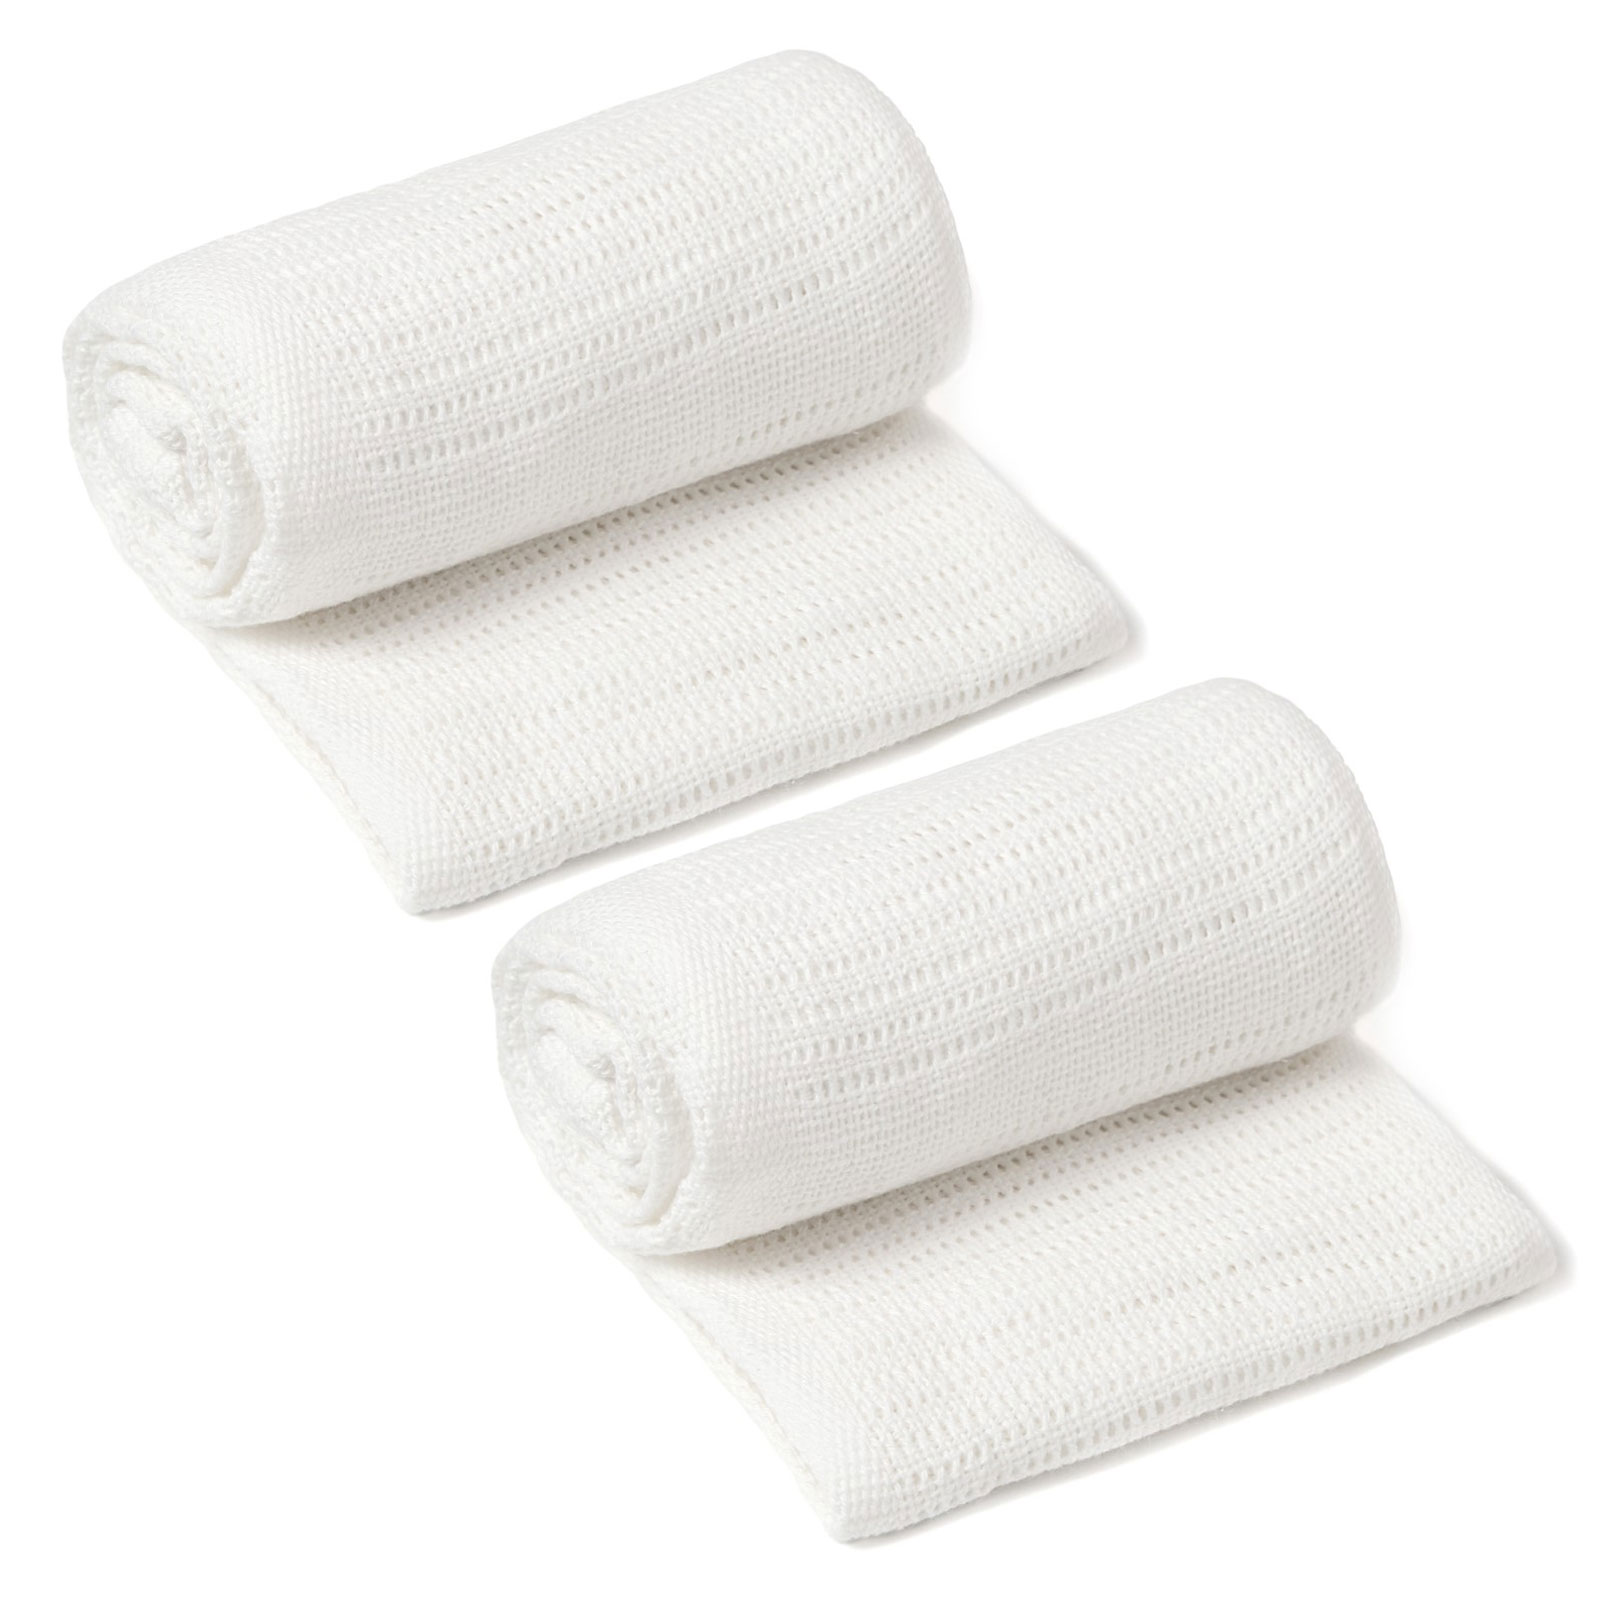 Soft Cotton Pram/Moses Basket/Crib Cellular Blanket (2 Pack) - White